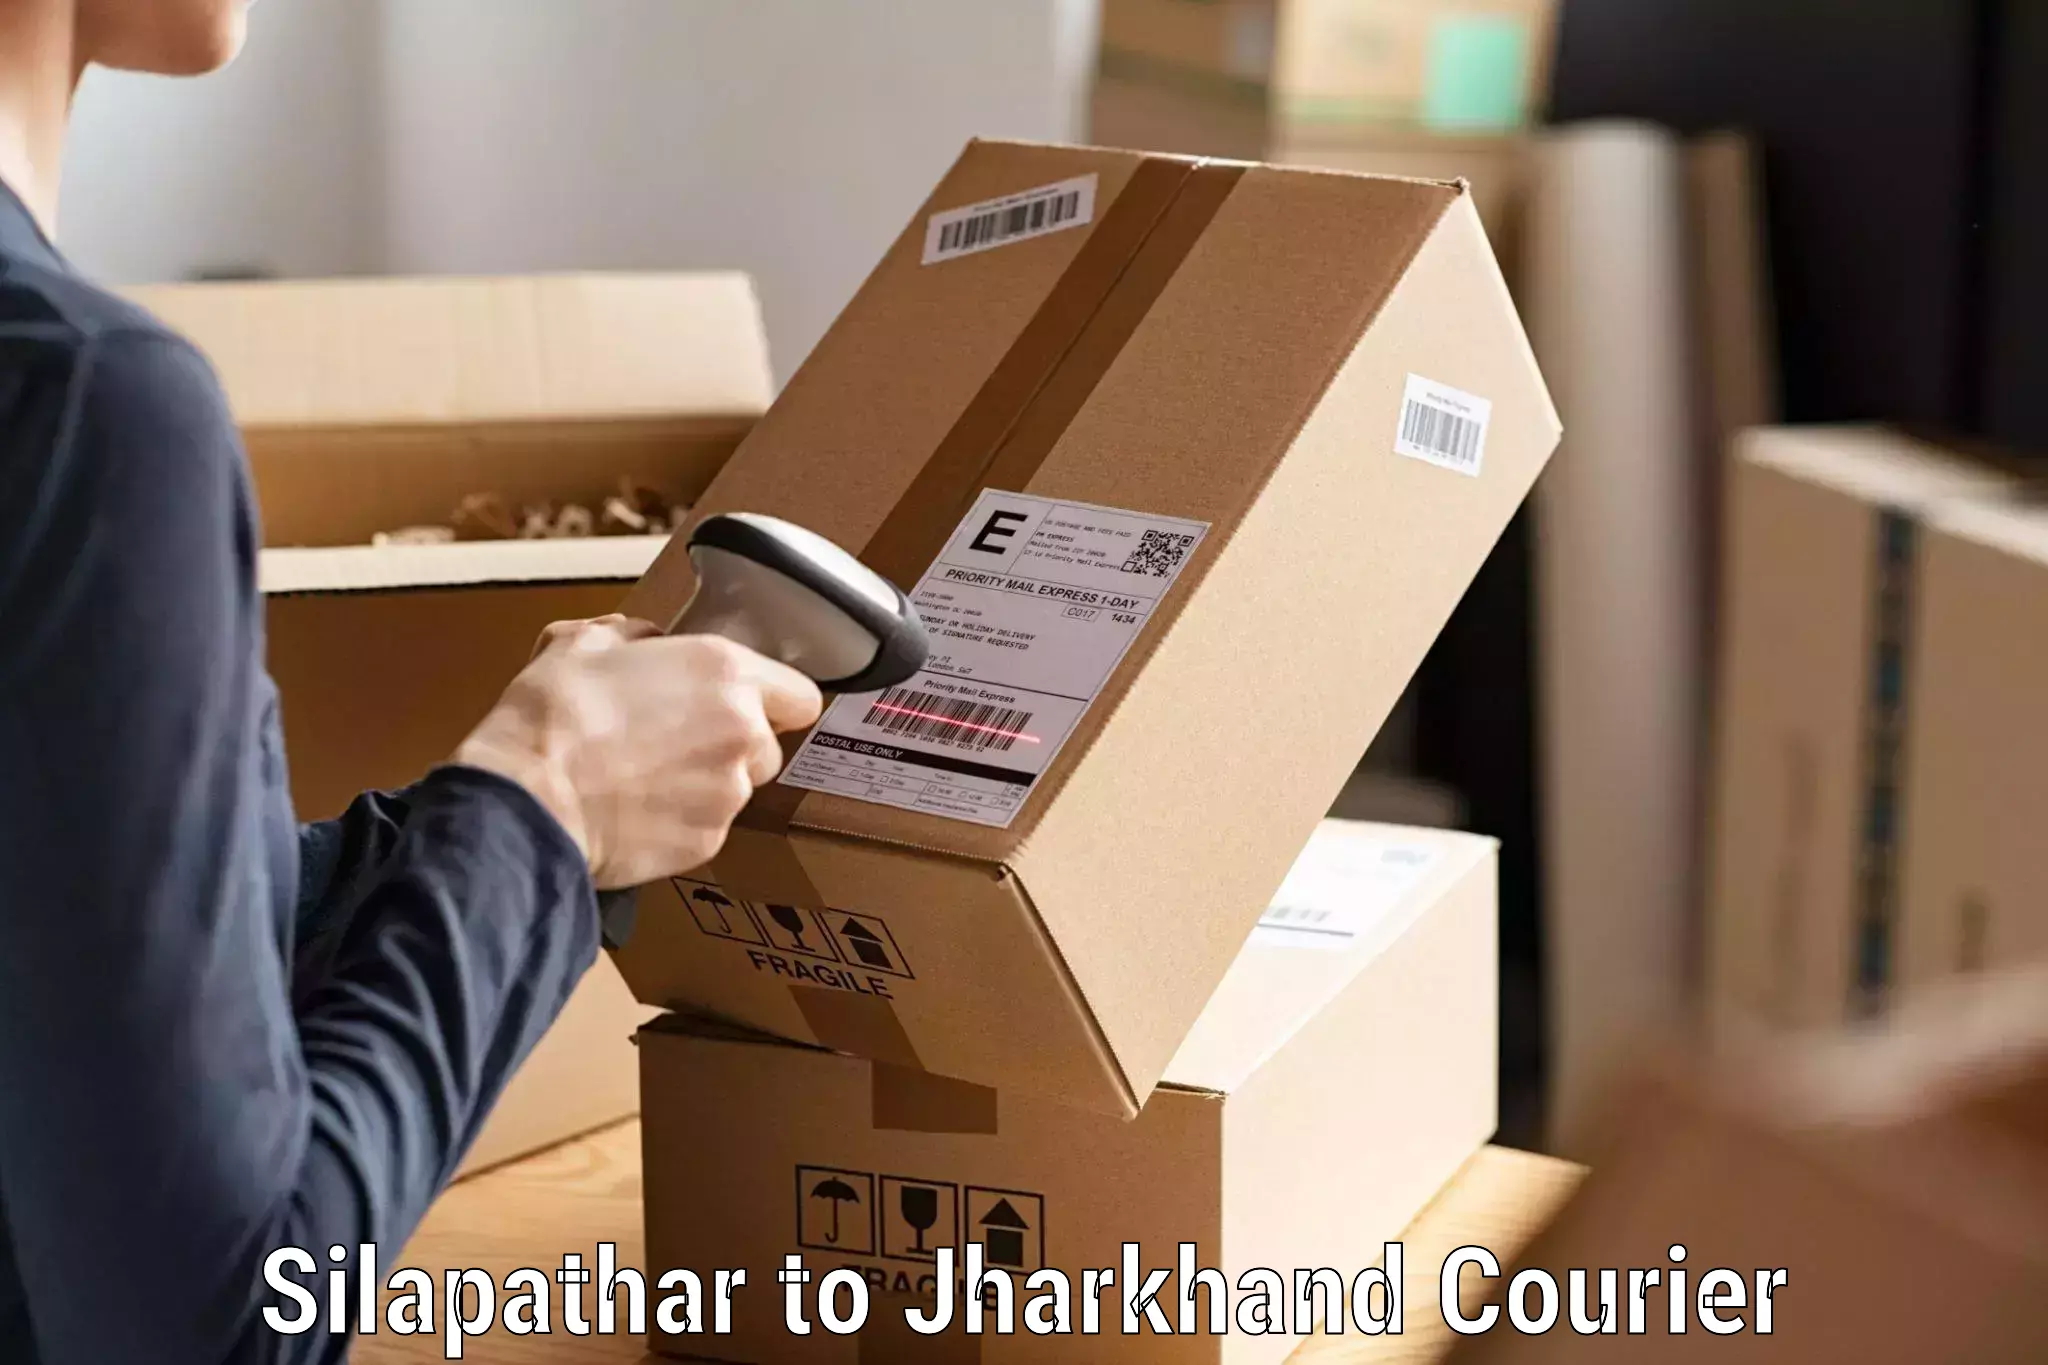 Courier service comparison Silapathar to Barki Saria